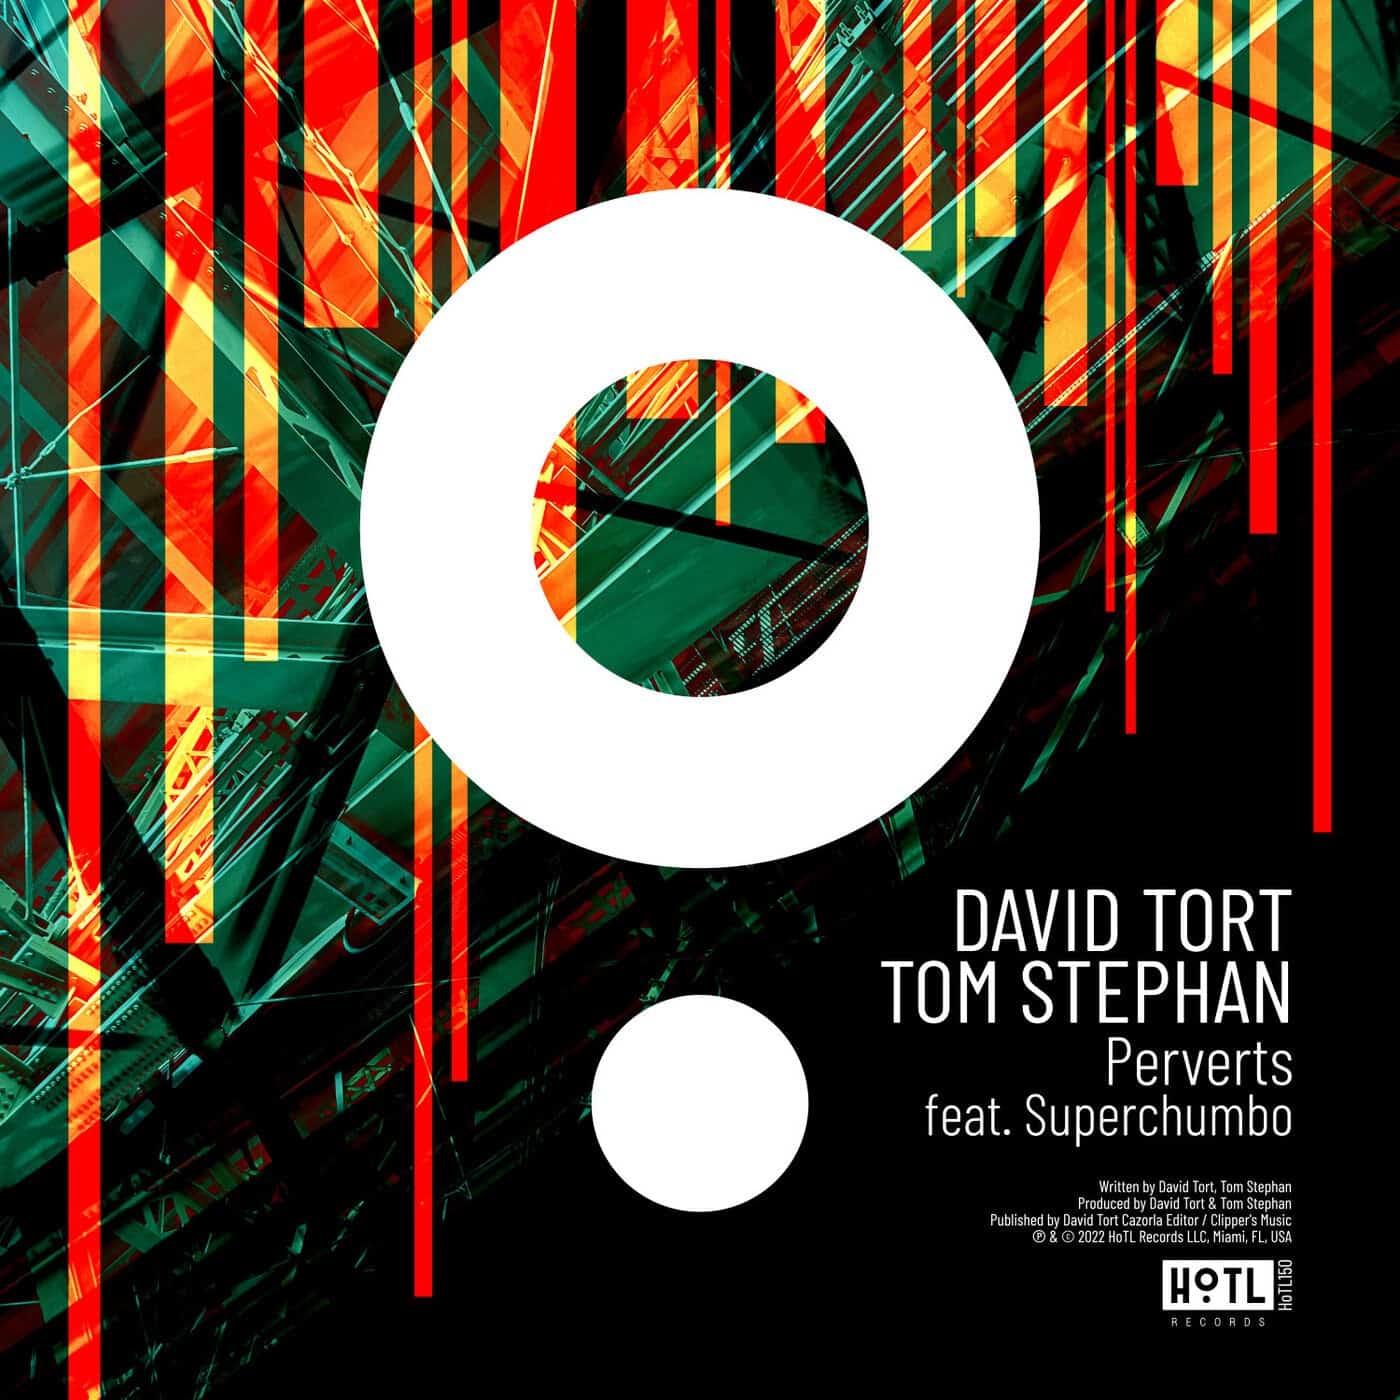 image cover: David Tort, Tom Stephan - Perverts / HOTL150BP